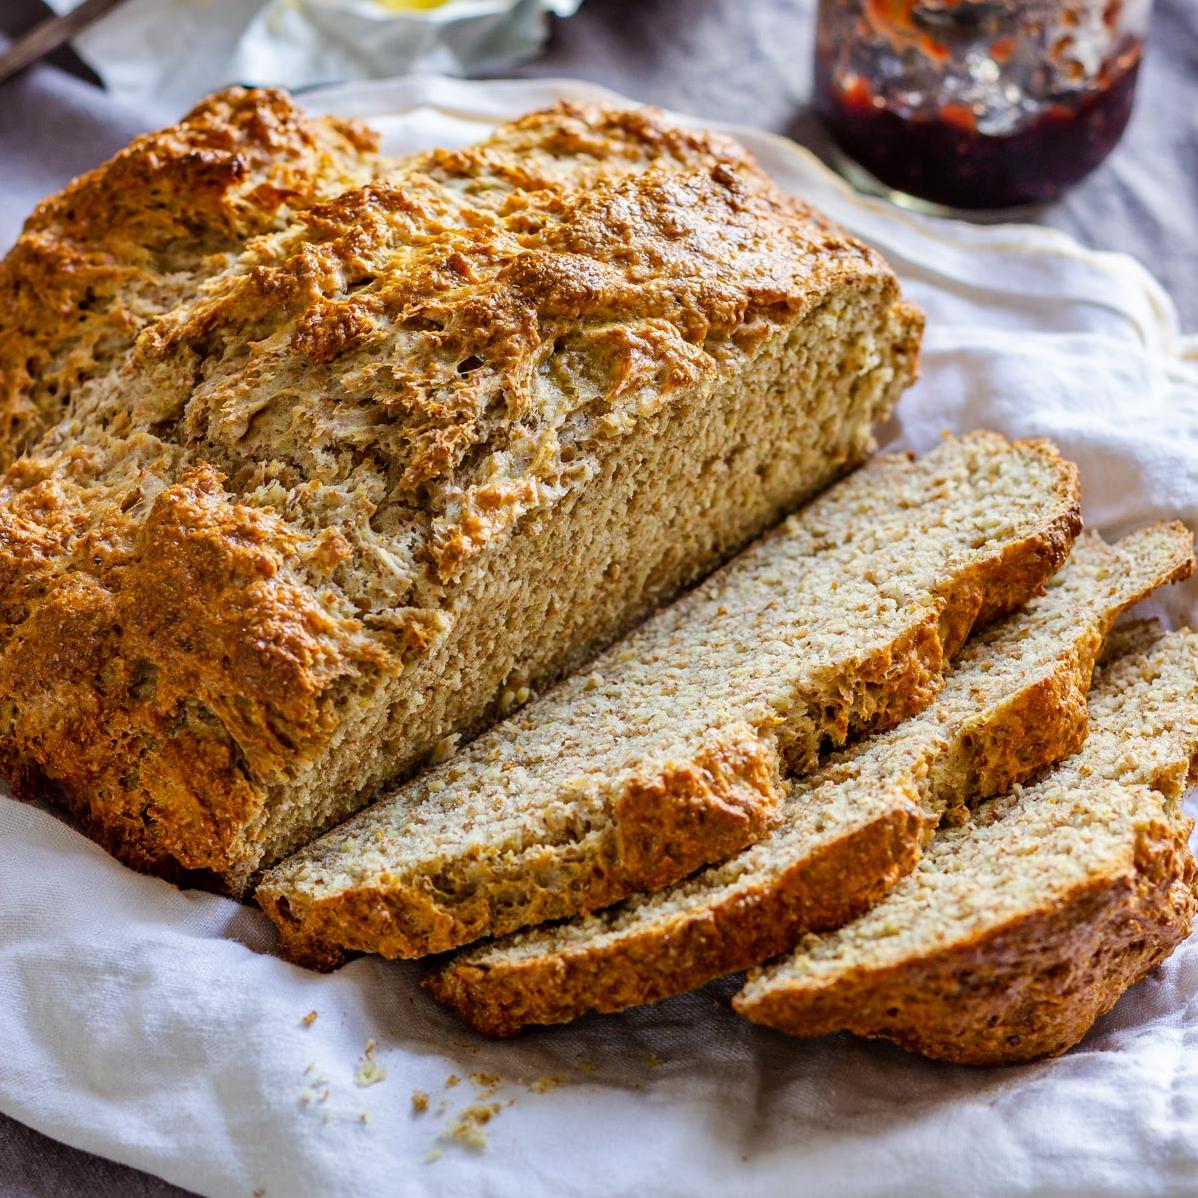 Wholesome and Quick: Try Our Irish Soda Bread Recipe